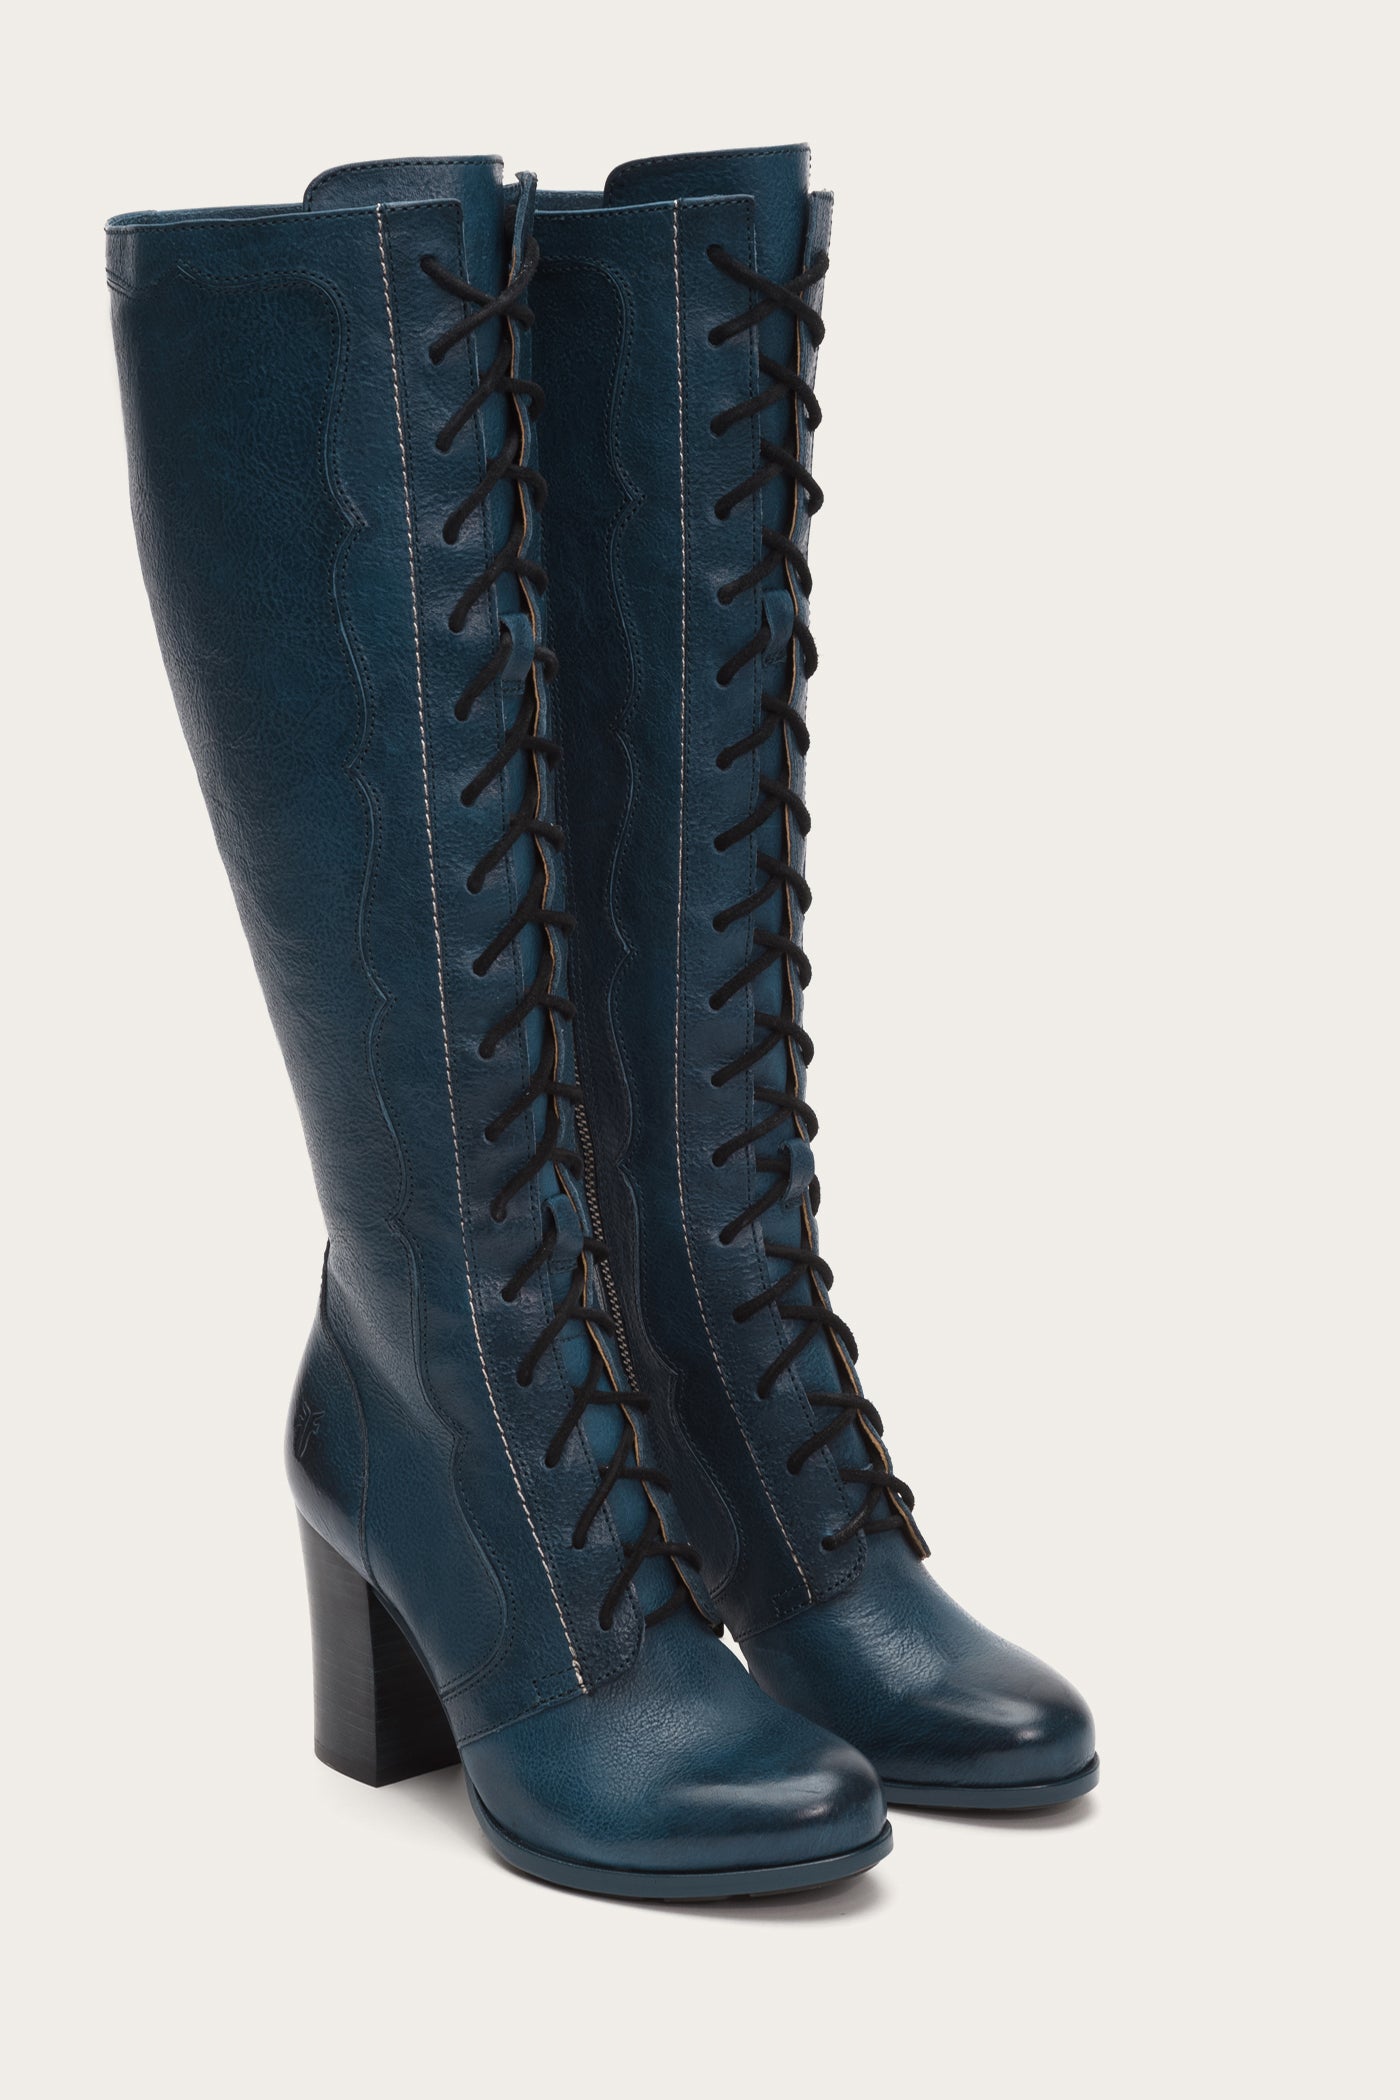 blue frye boots